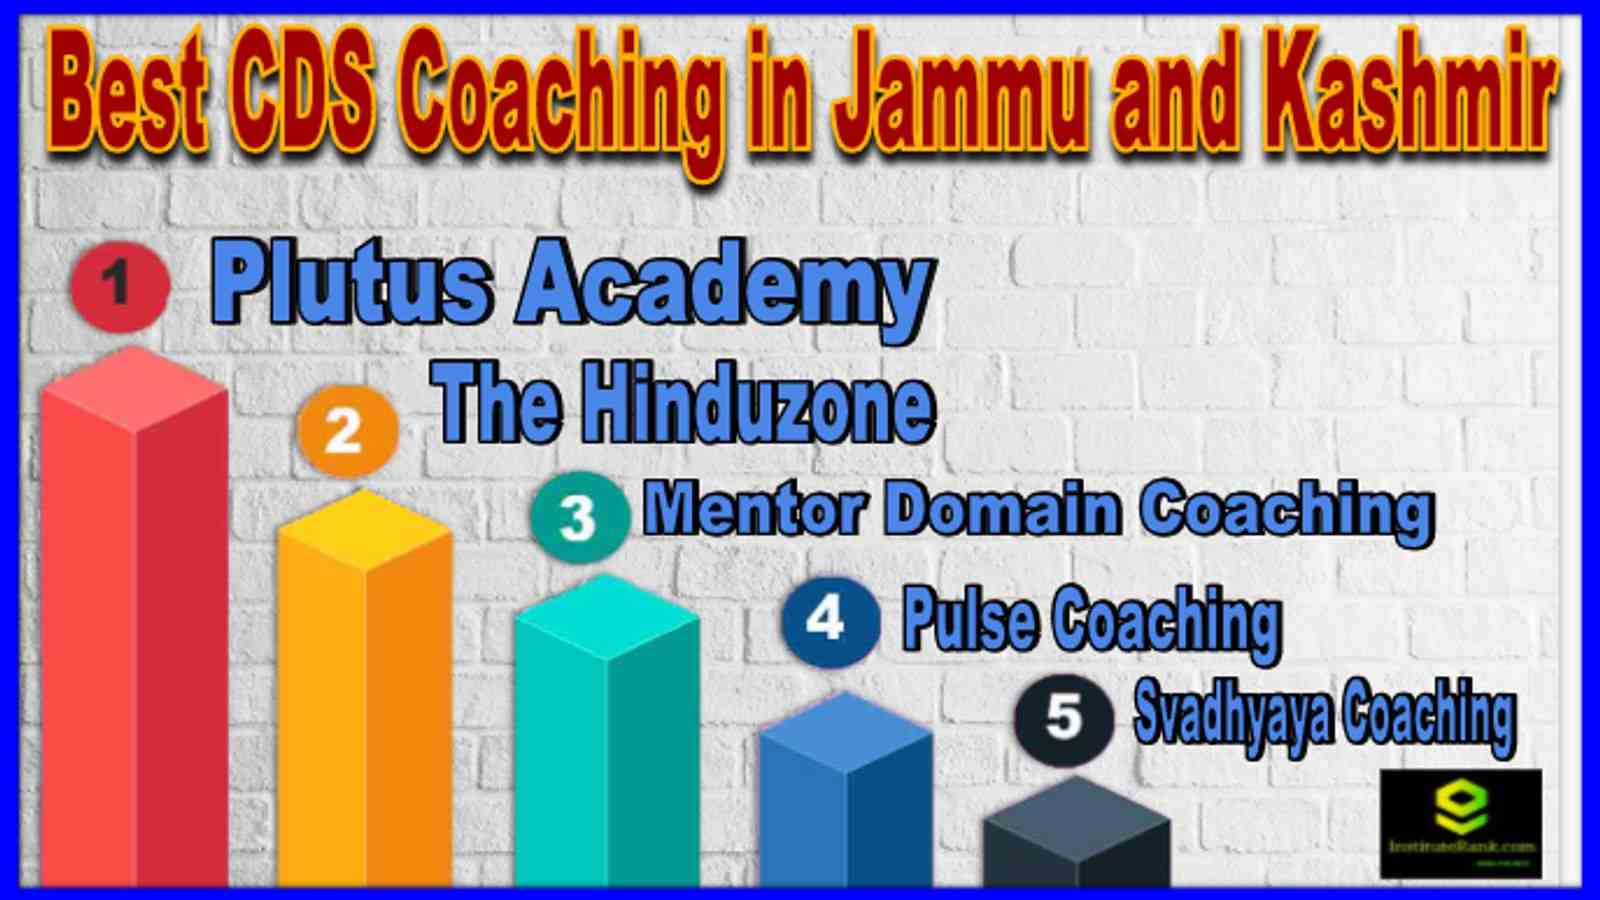 Best CDS Coaching in Jammu and Kashmir